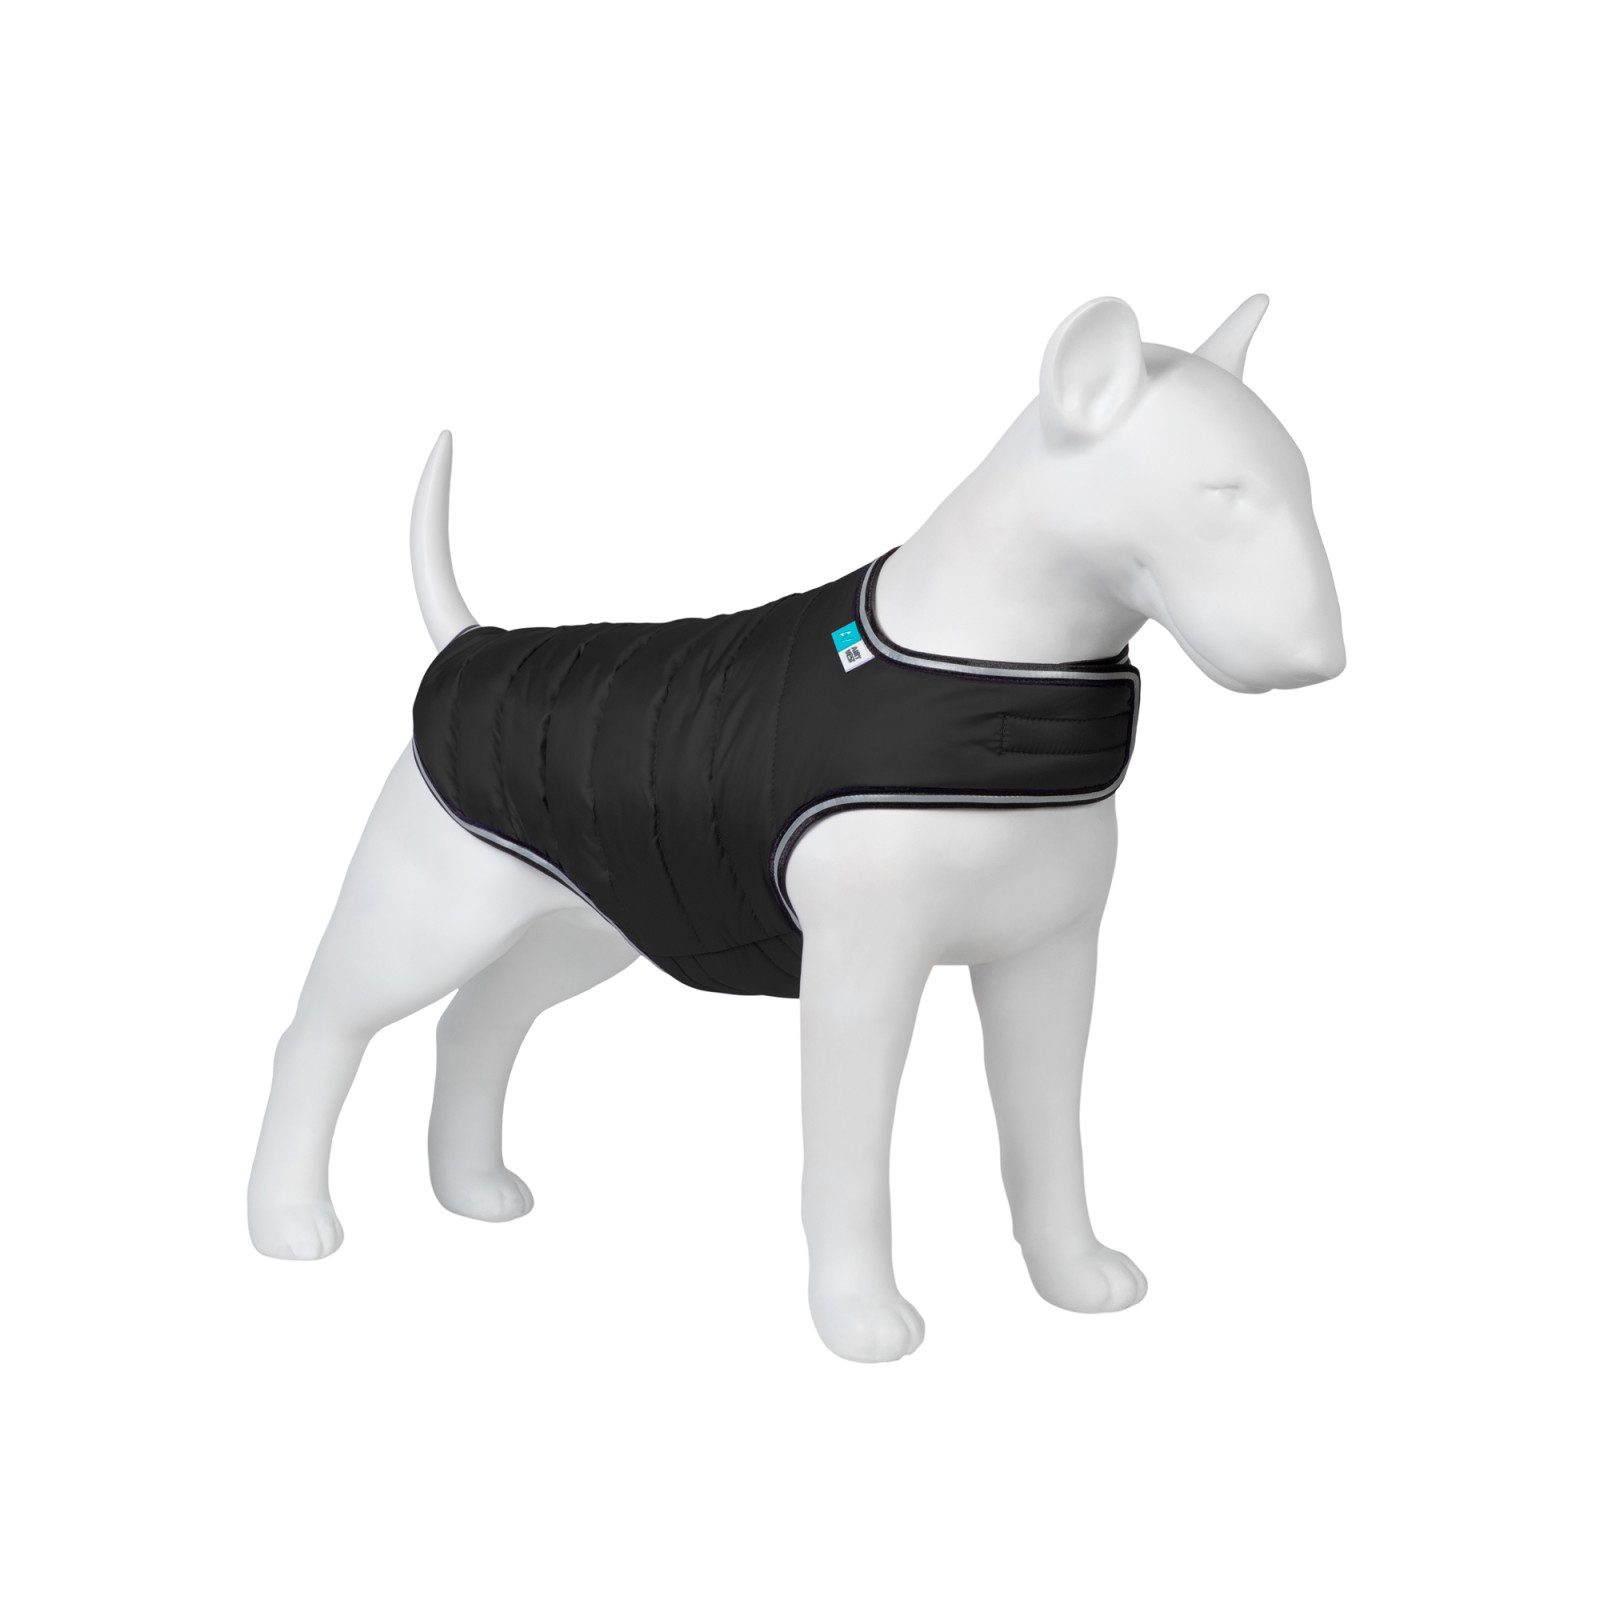 Курточка для животных Airy Vest XL фиолетовая (15459)